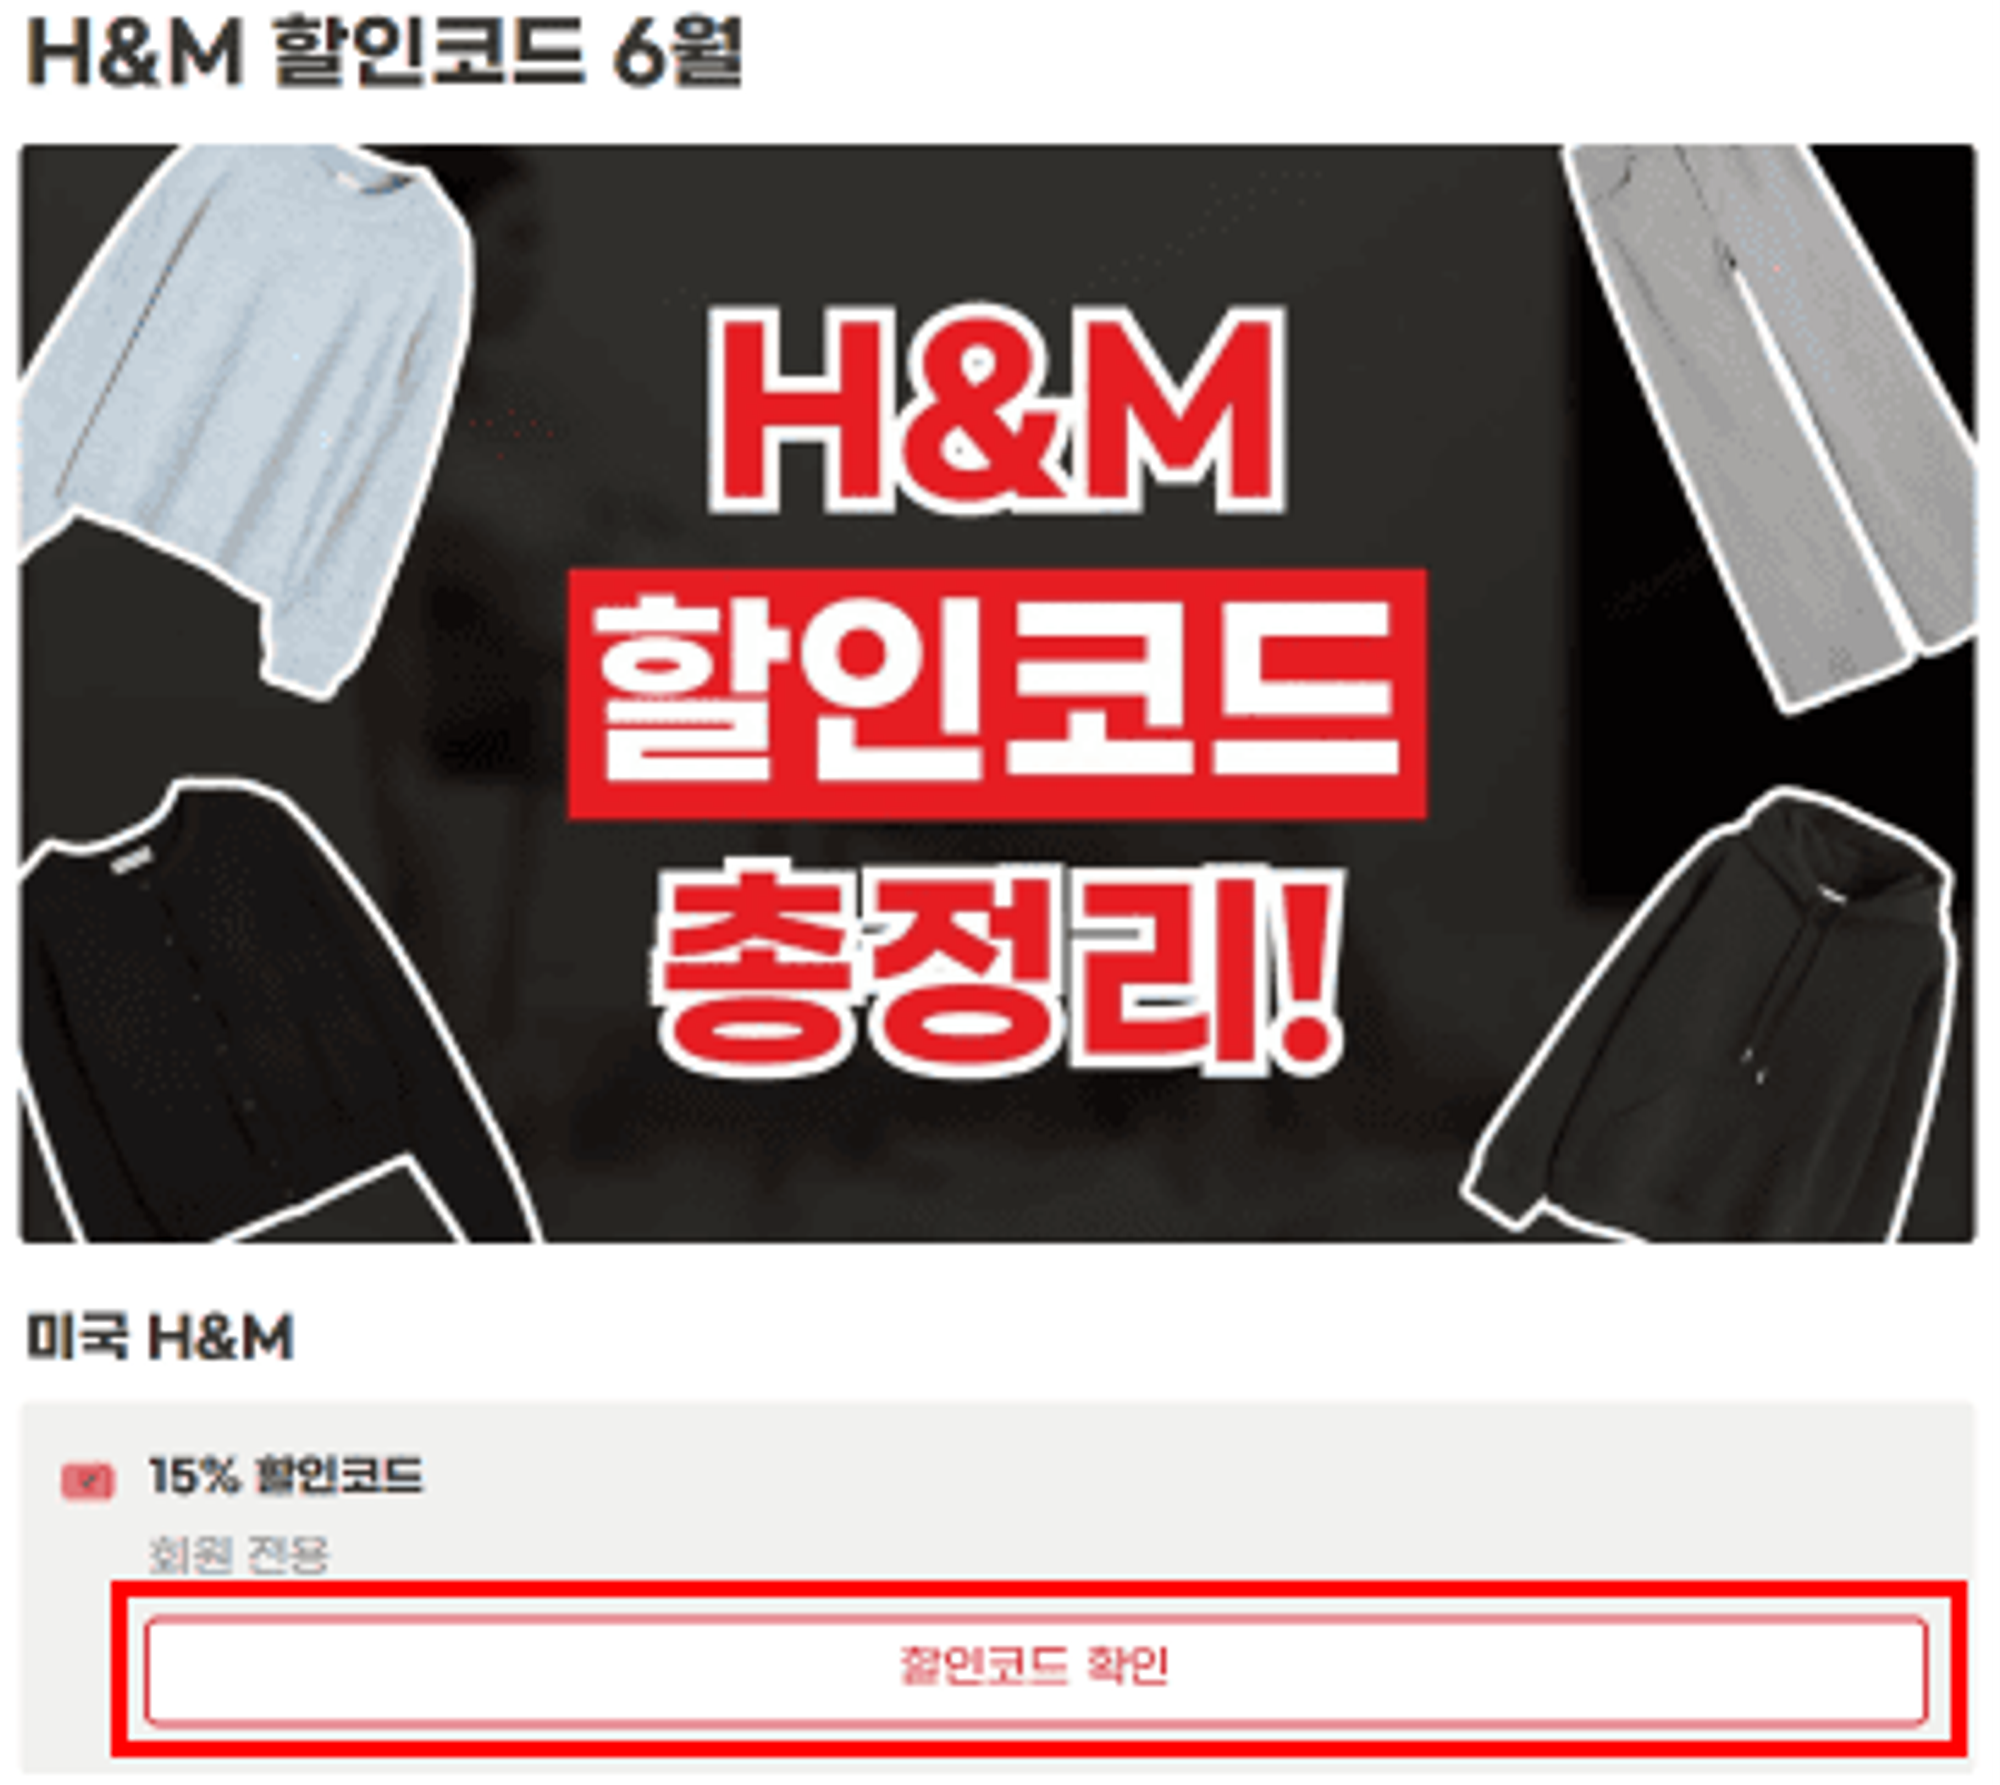 H&M 할인코드 사용방법